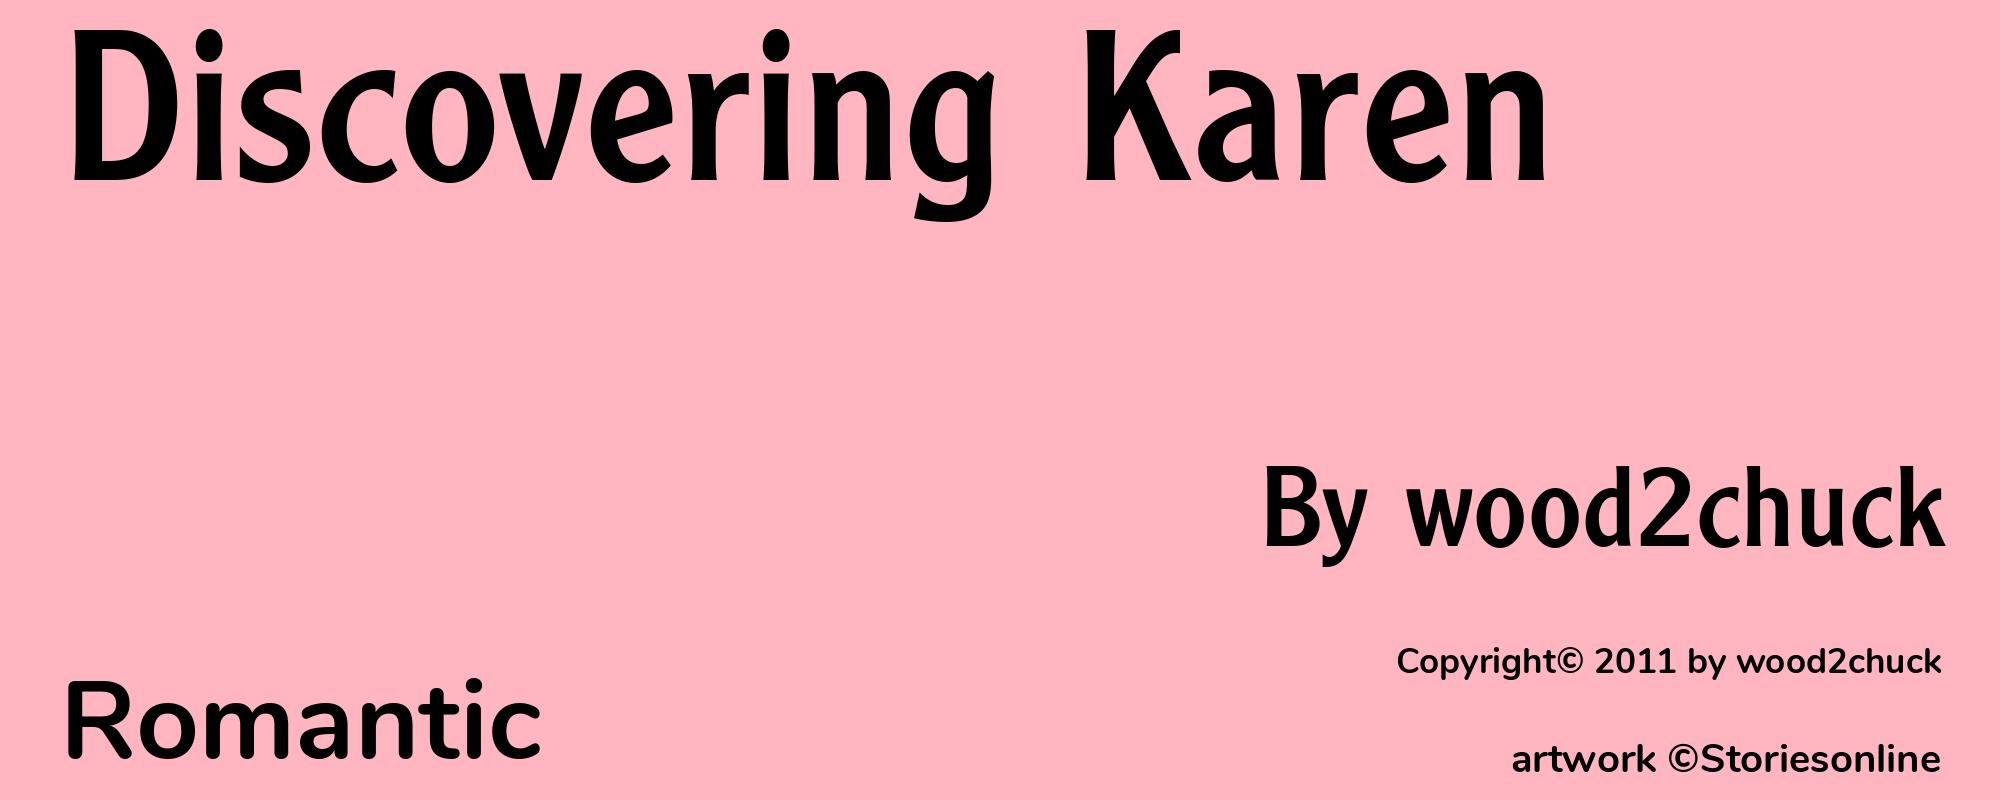 Discovering Karen - Cover